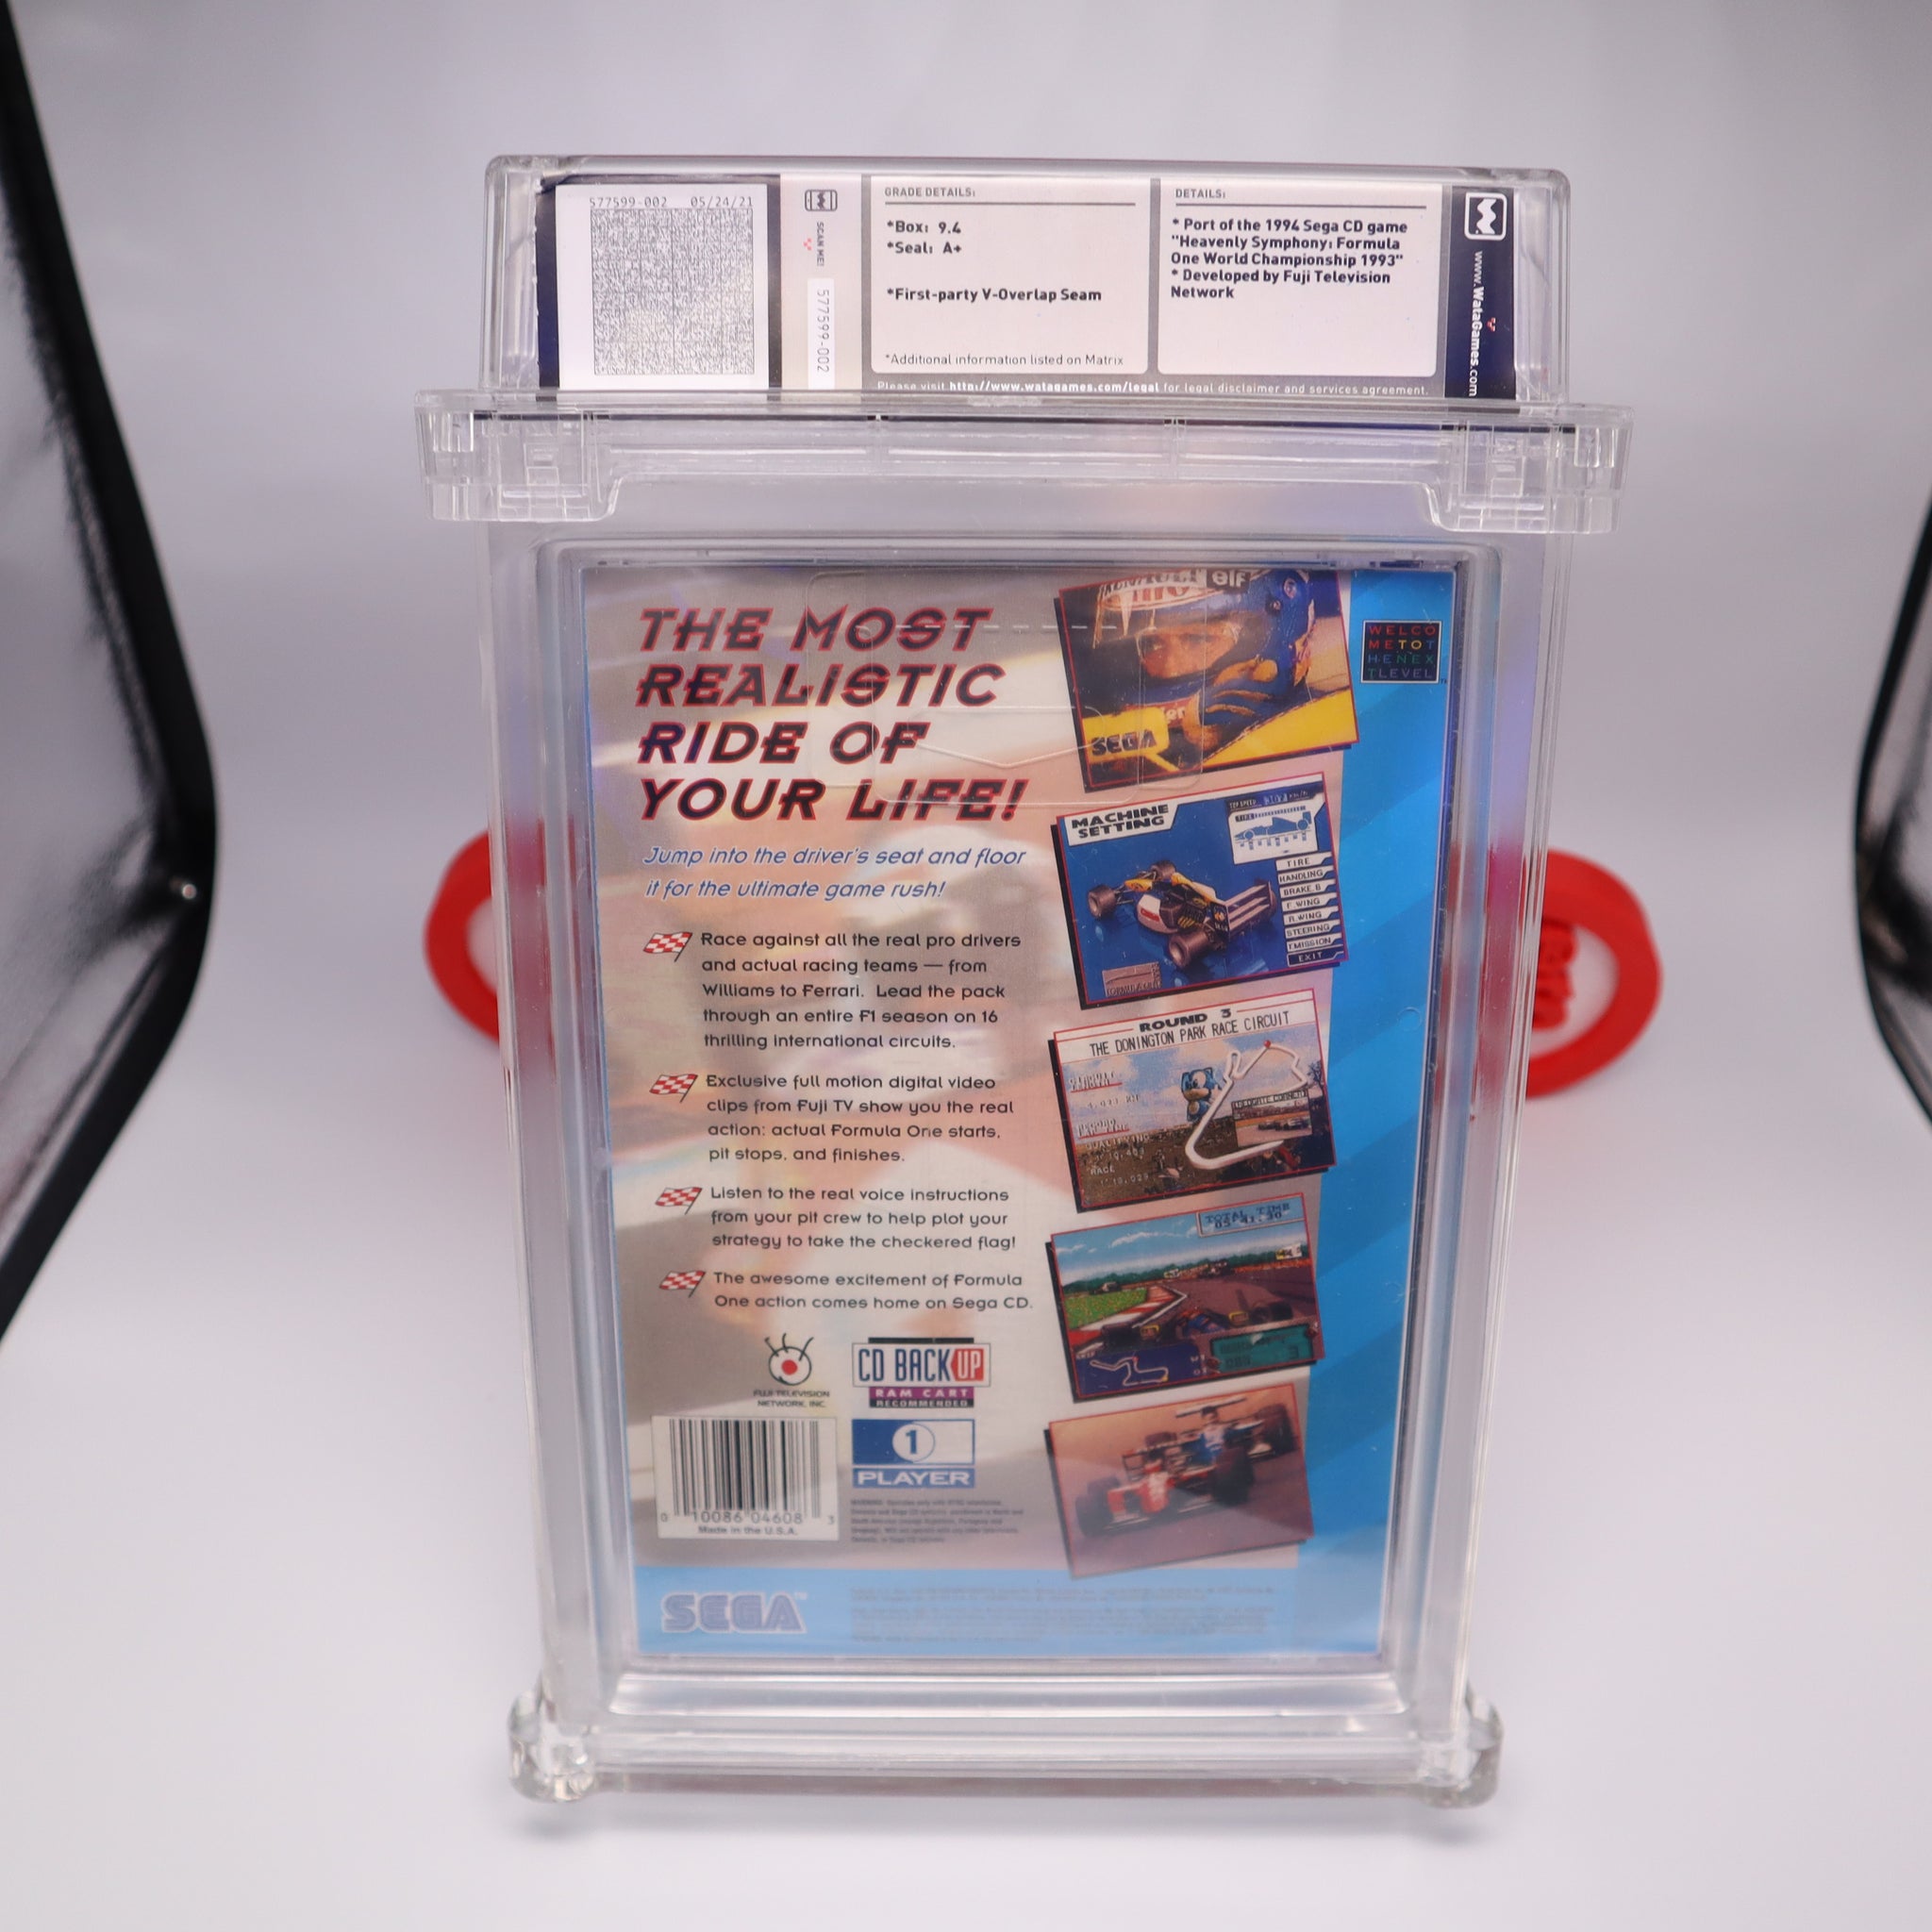 F1 World Grand Prix (PC CD) New US Retail Store Big Boxed Edition Sealed -  Rare!